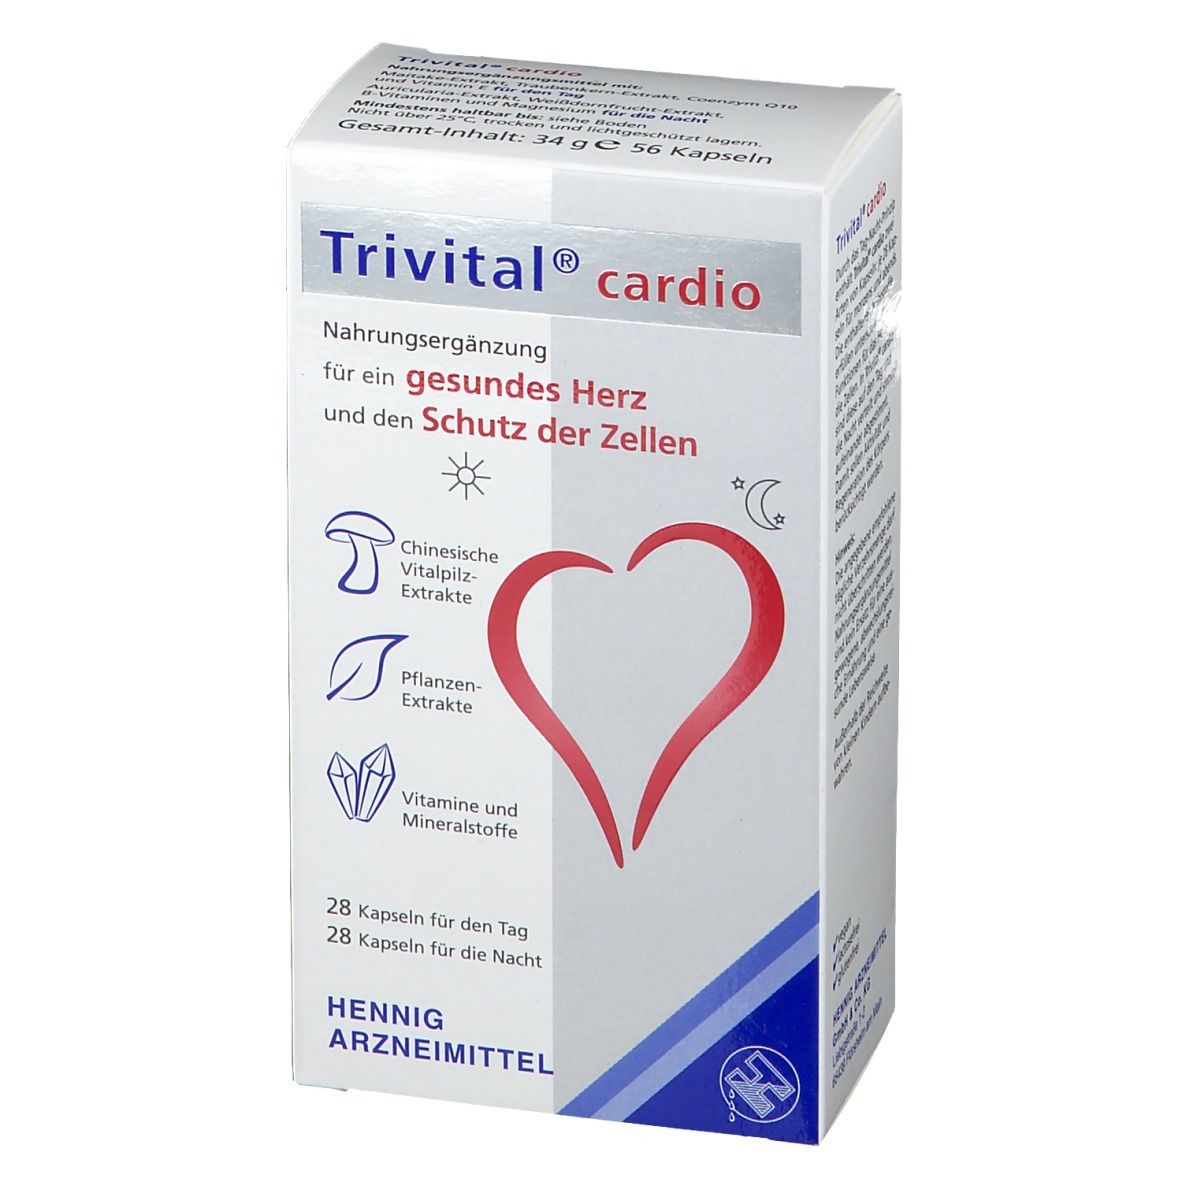 Trivital® cardio